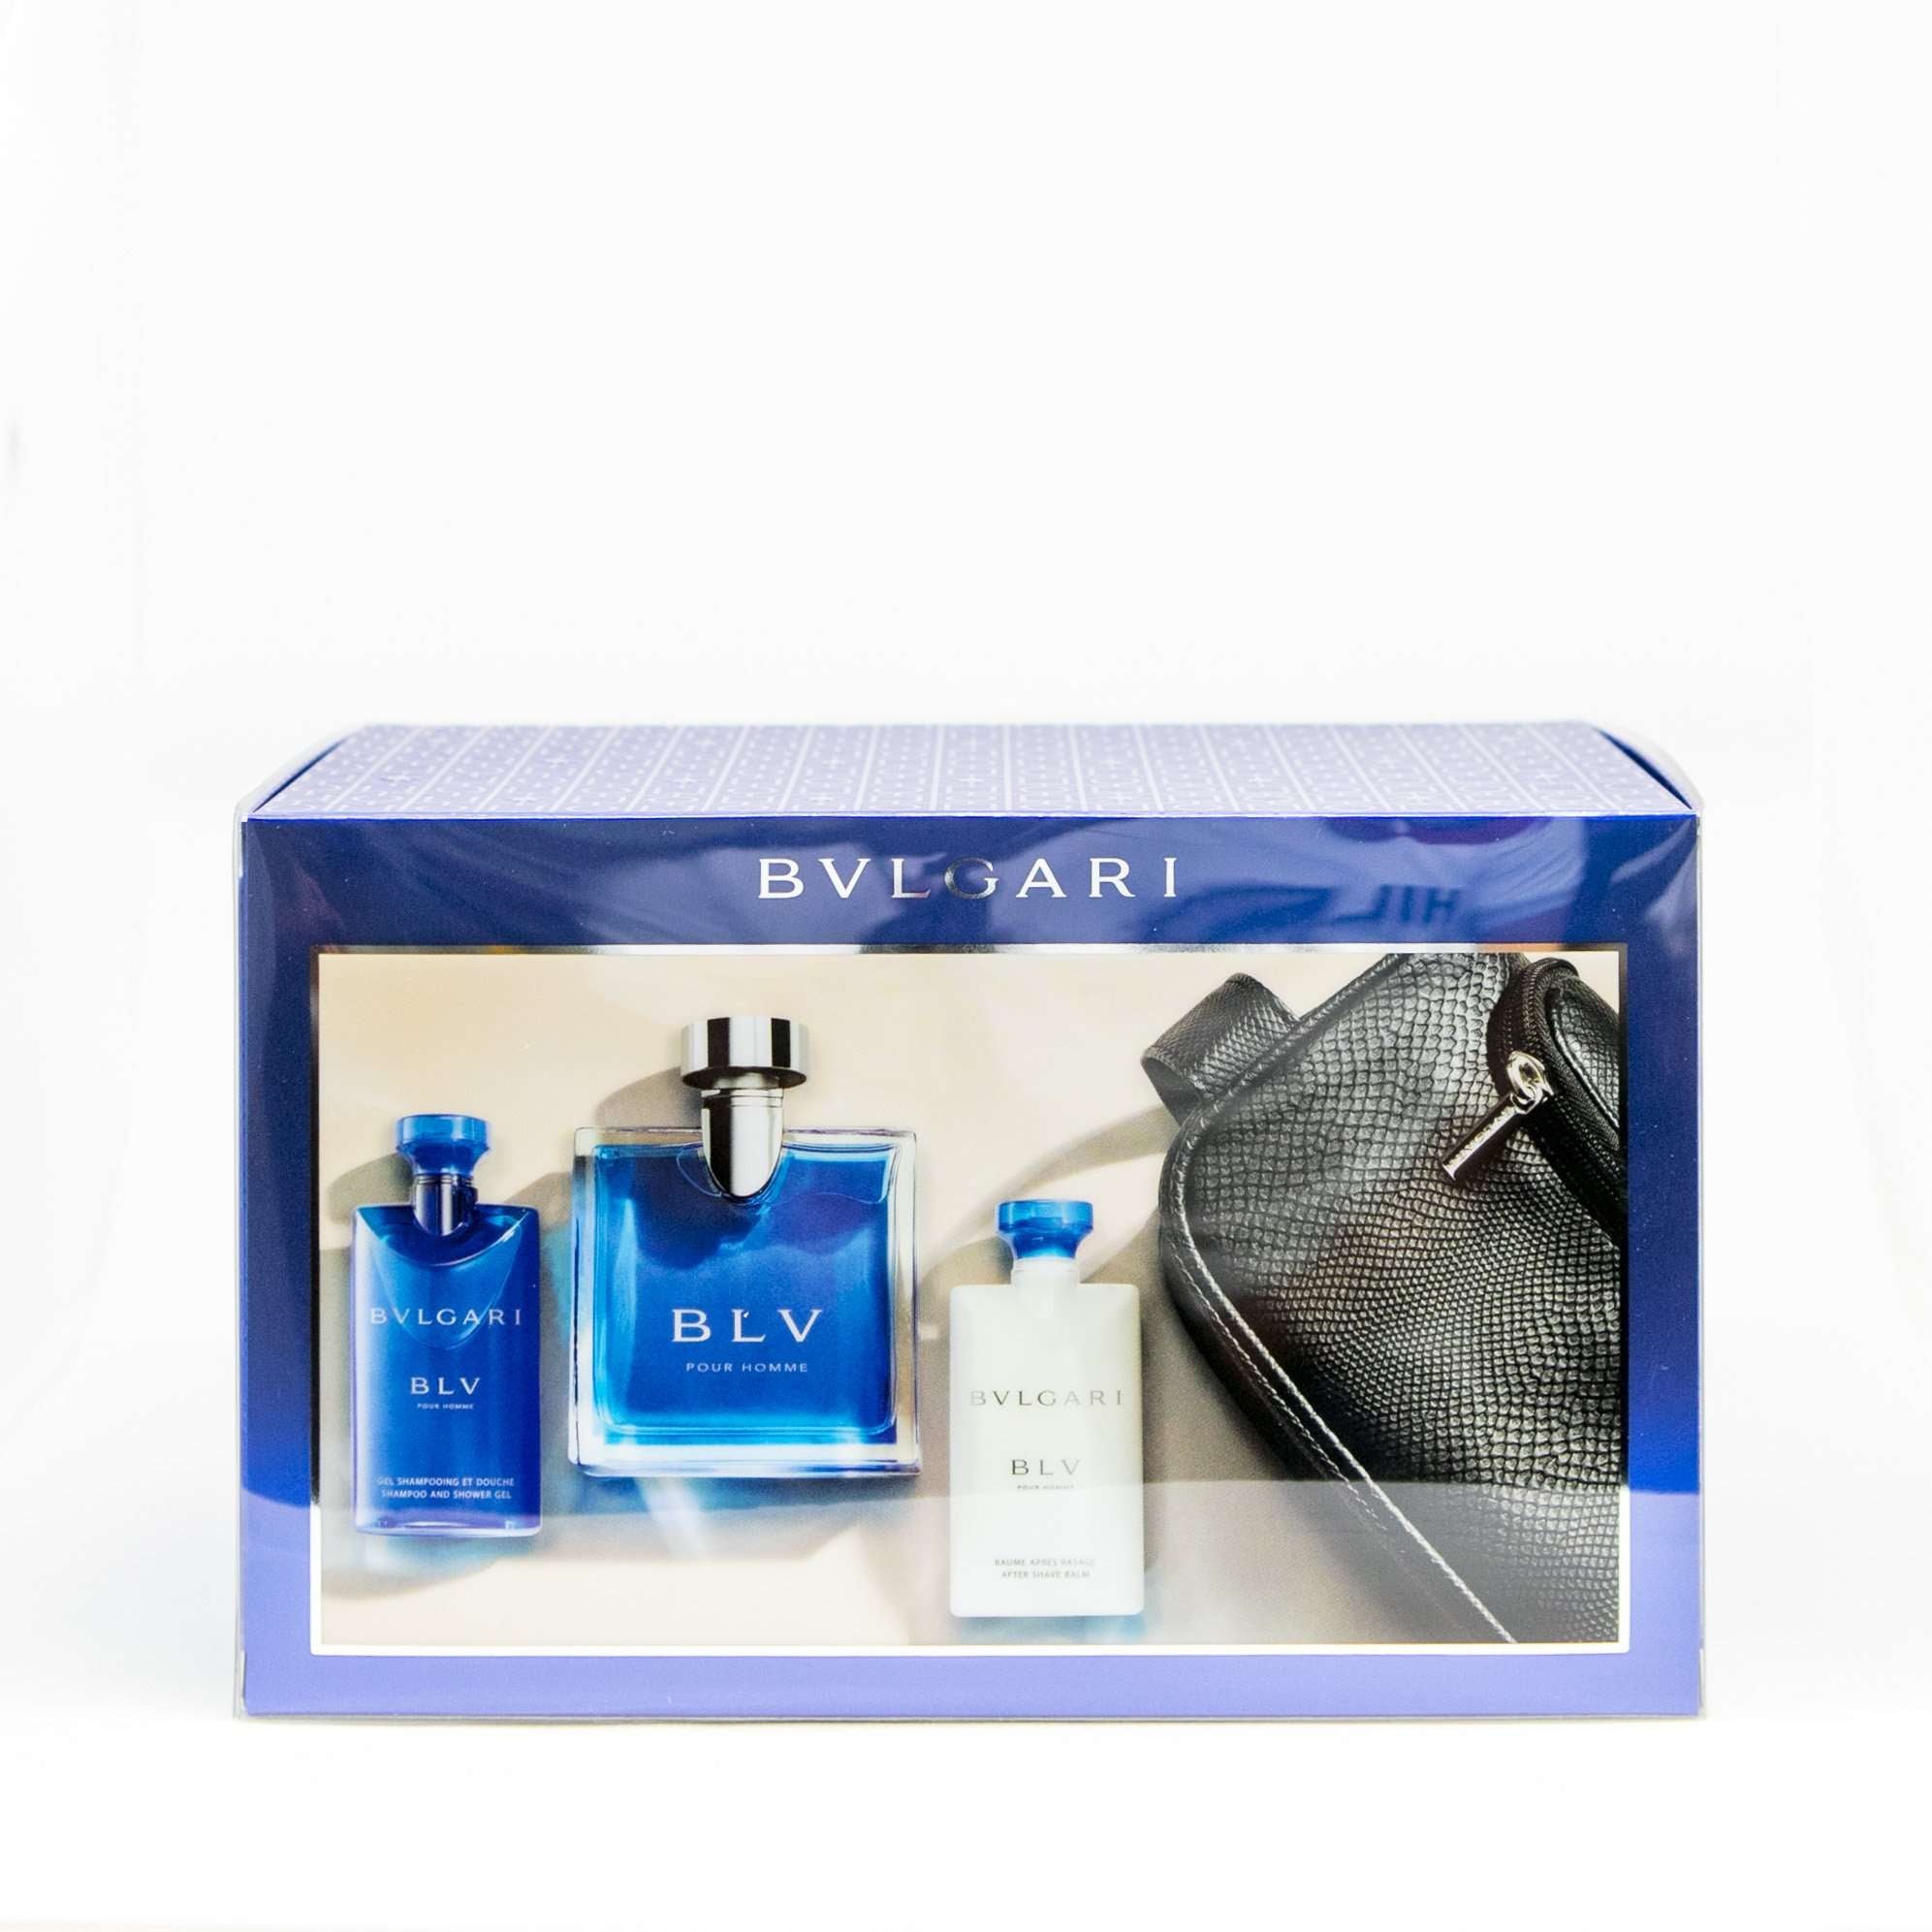 Bvlgari Blv Perfume Gift Set for Men by 